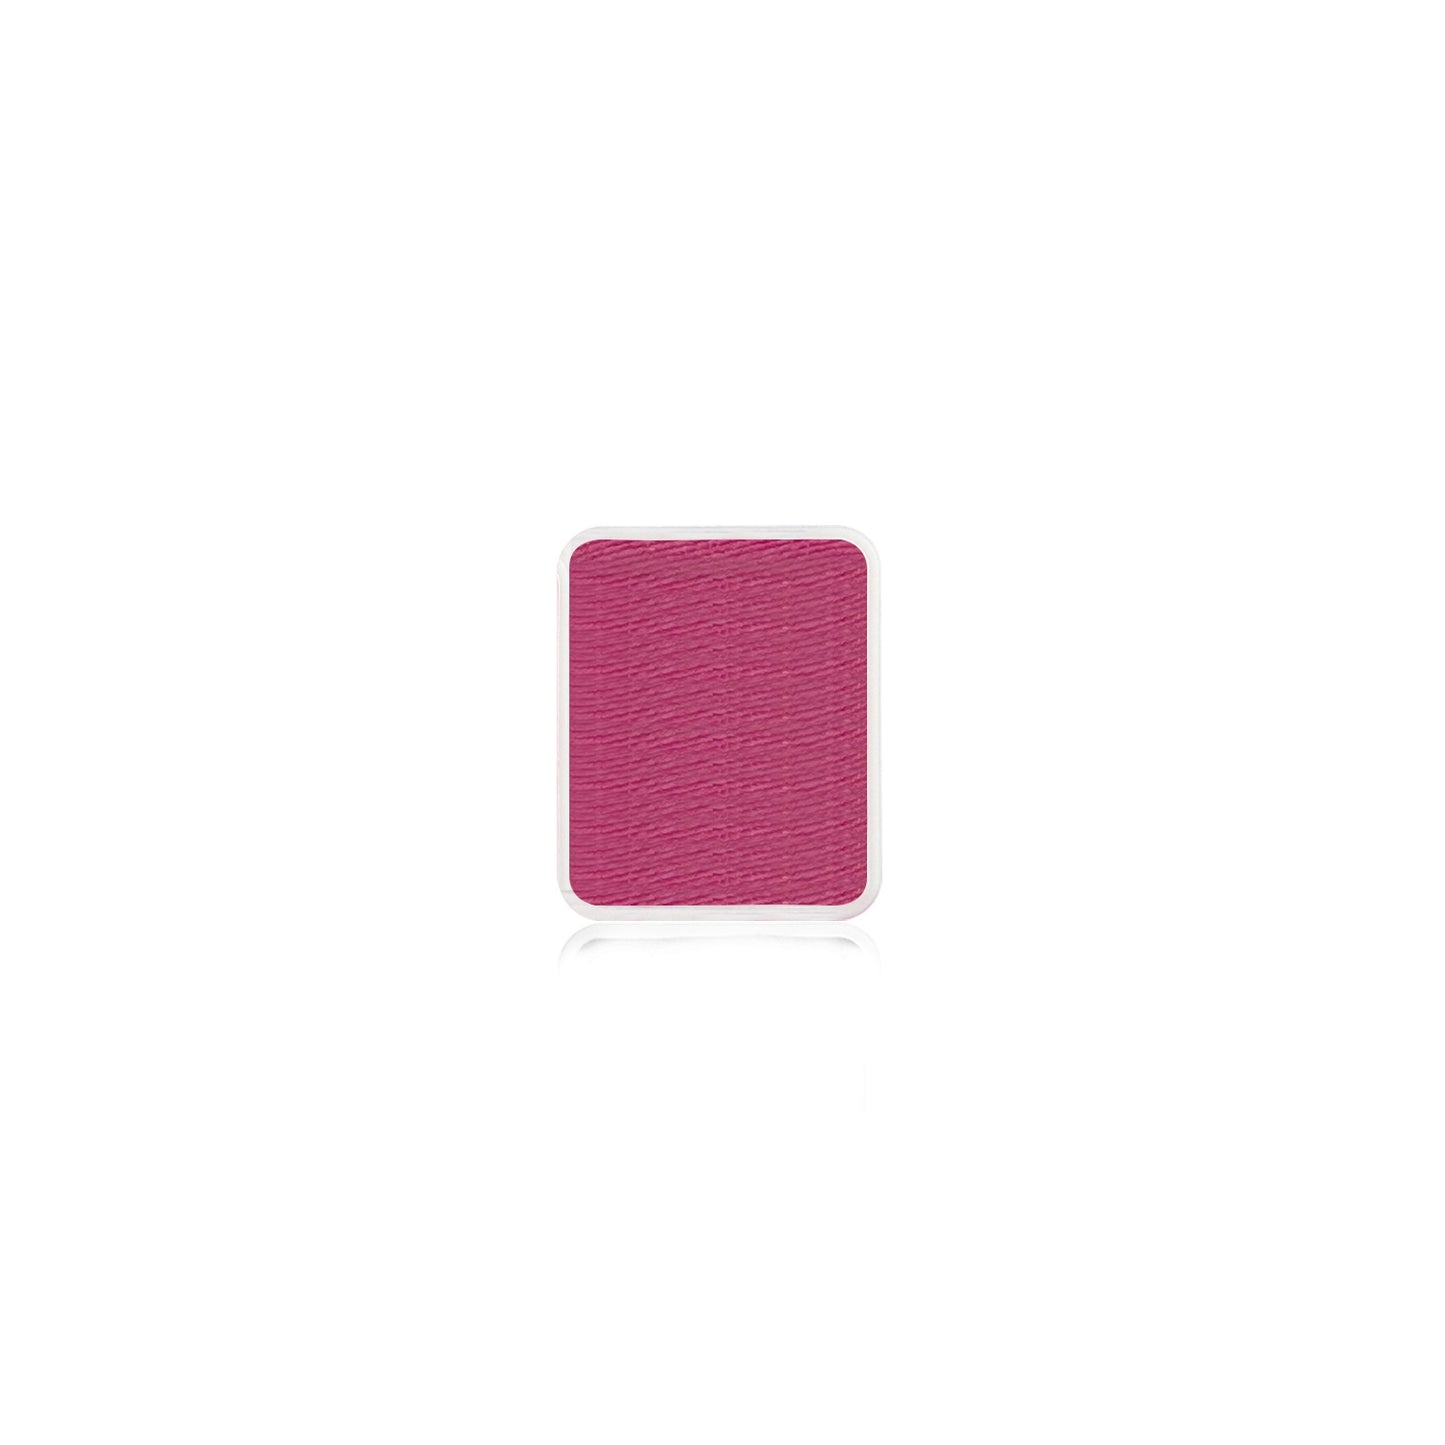 Kraze FX Face Paint Refill - Coral Pink (6 gm)